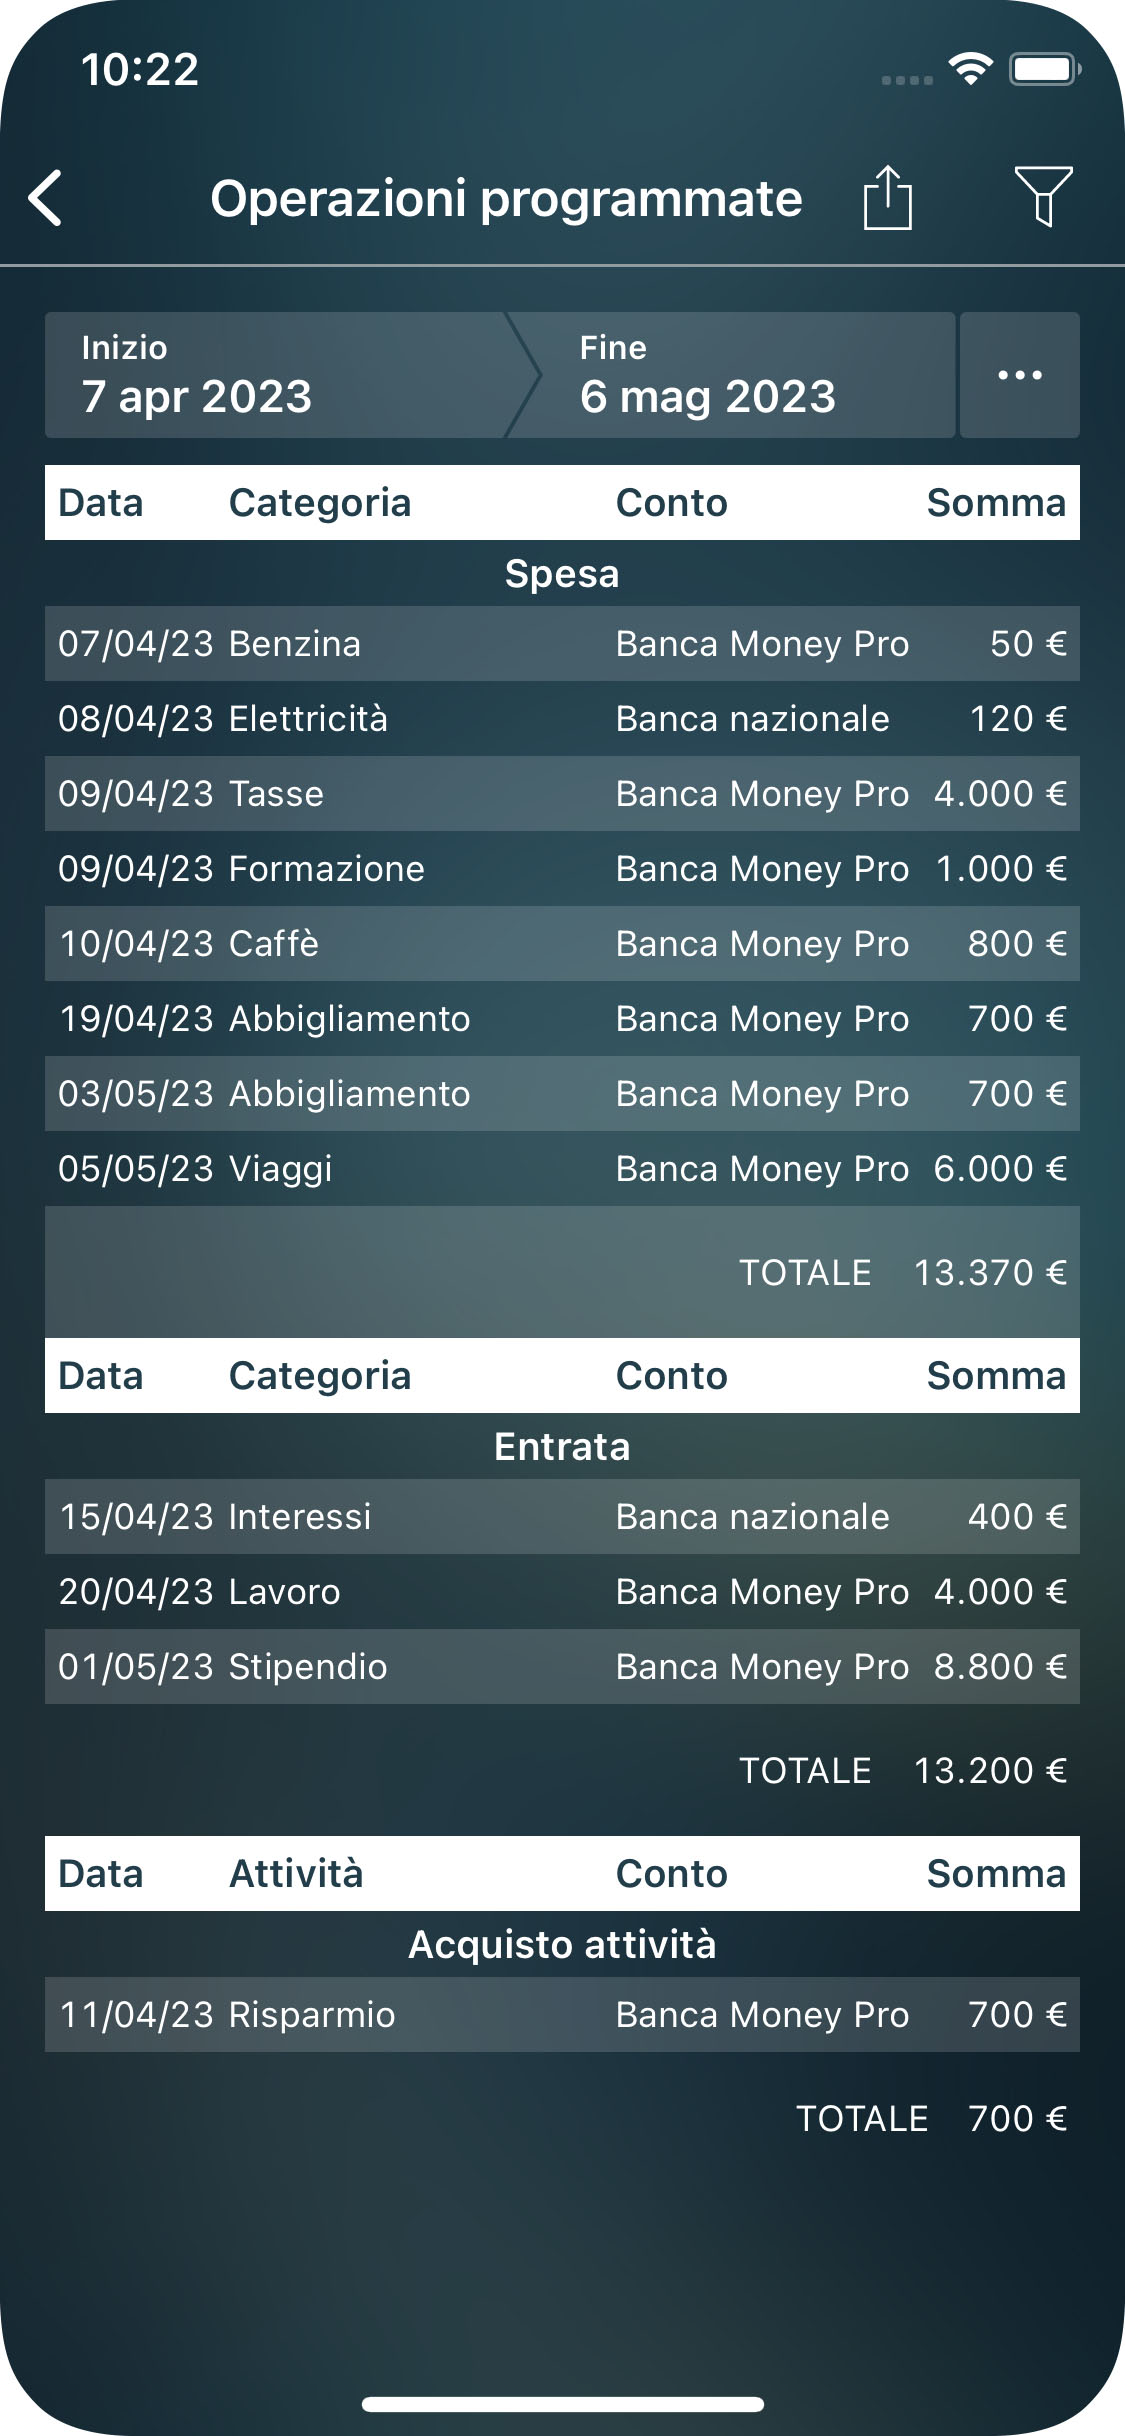 Money Pro - Resoconto Operazioni programmate - iPhone